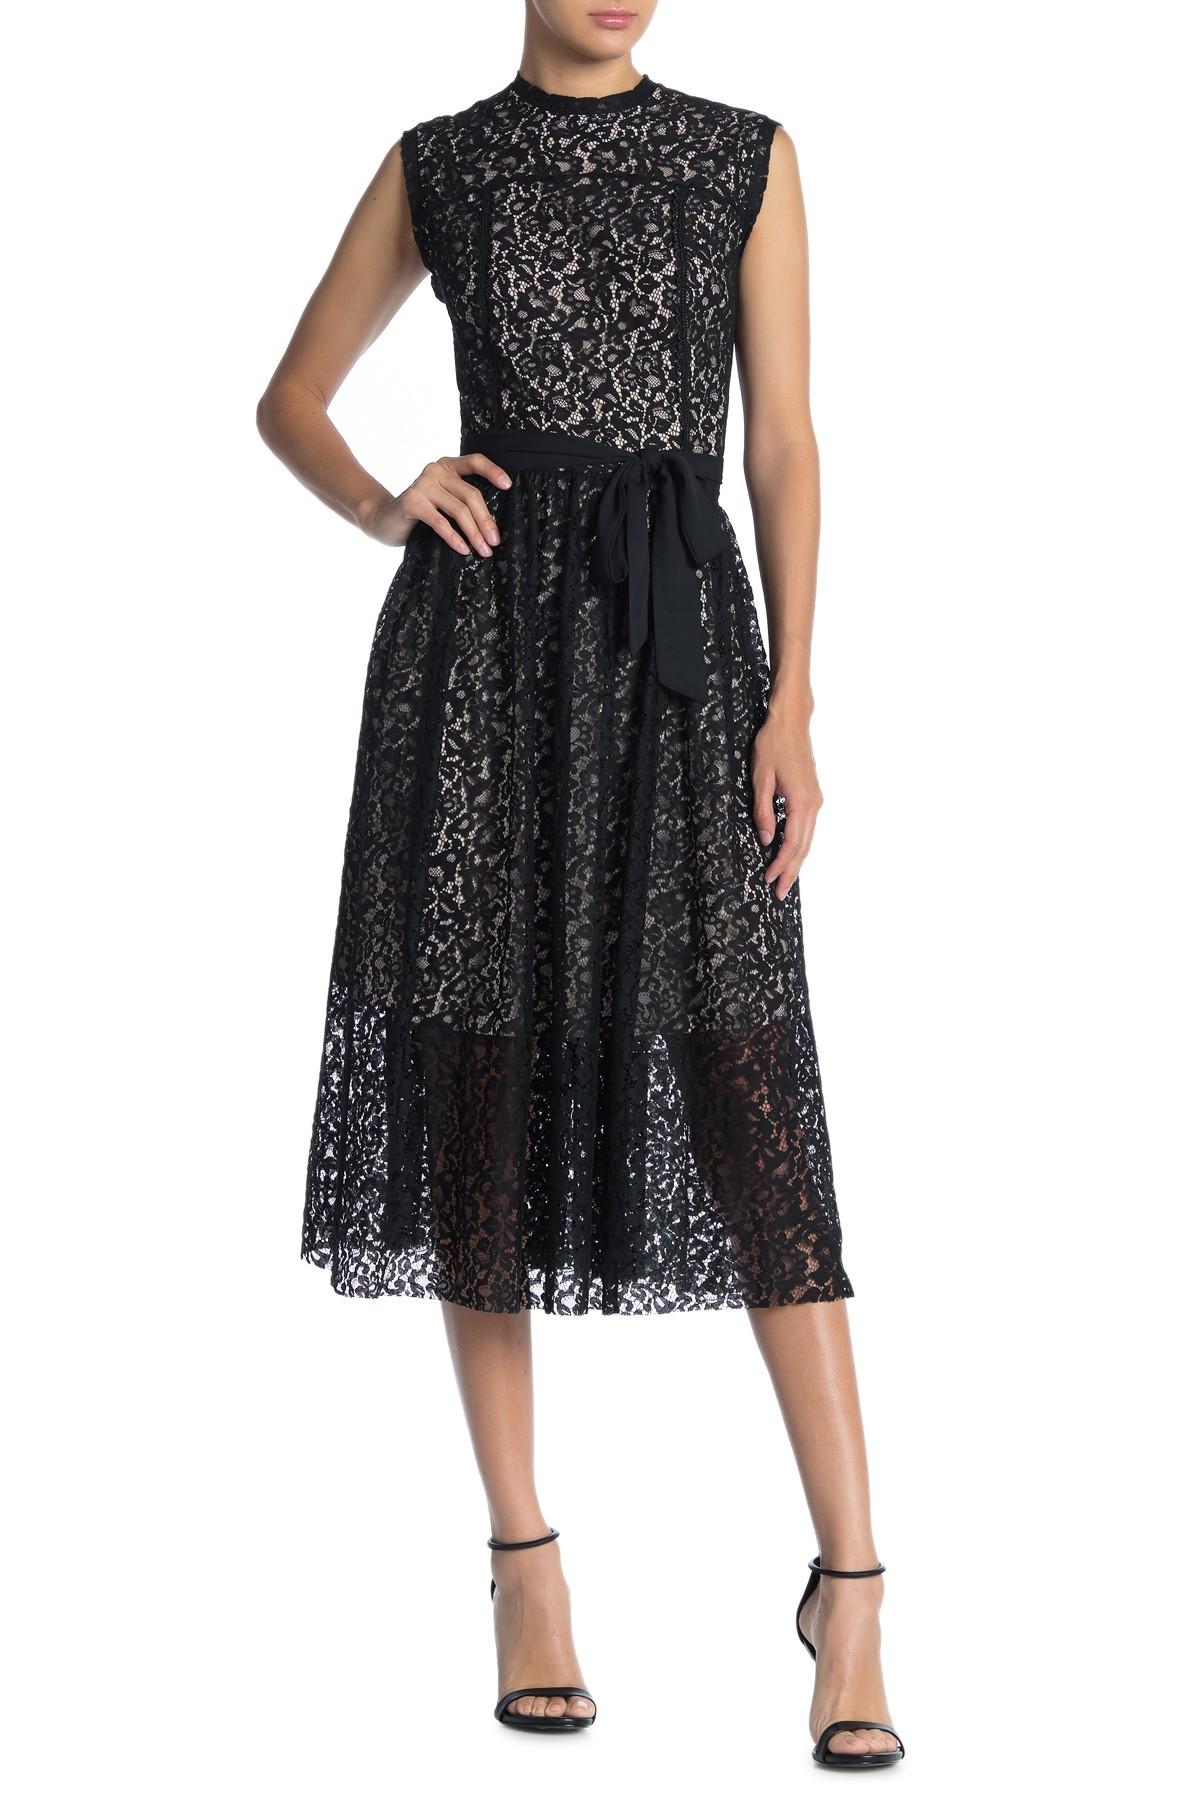 Gracia Sleeveless Lace Dress in Black - Lyst